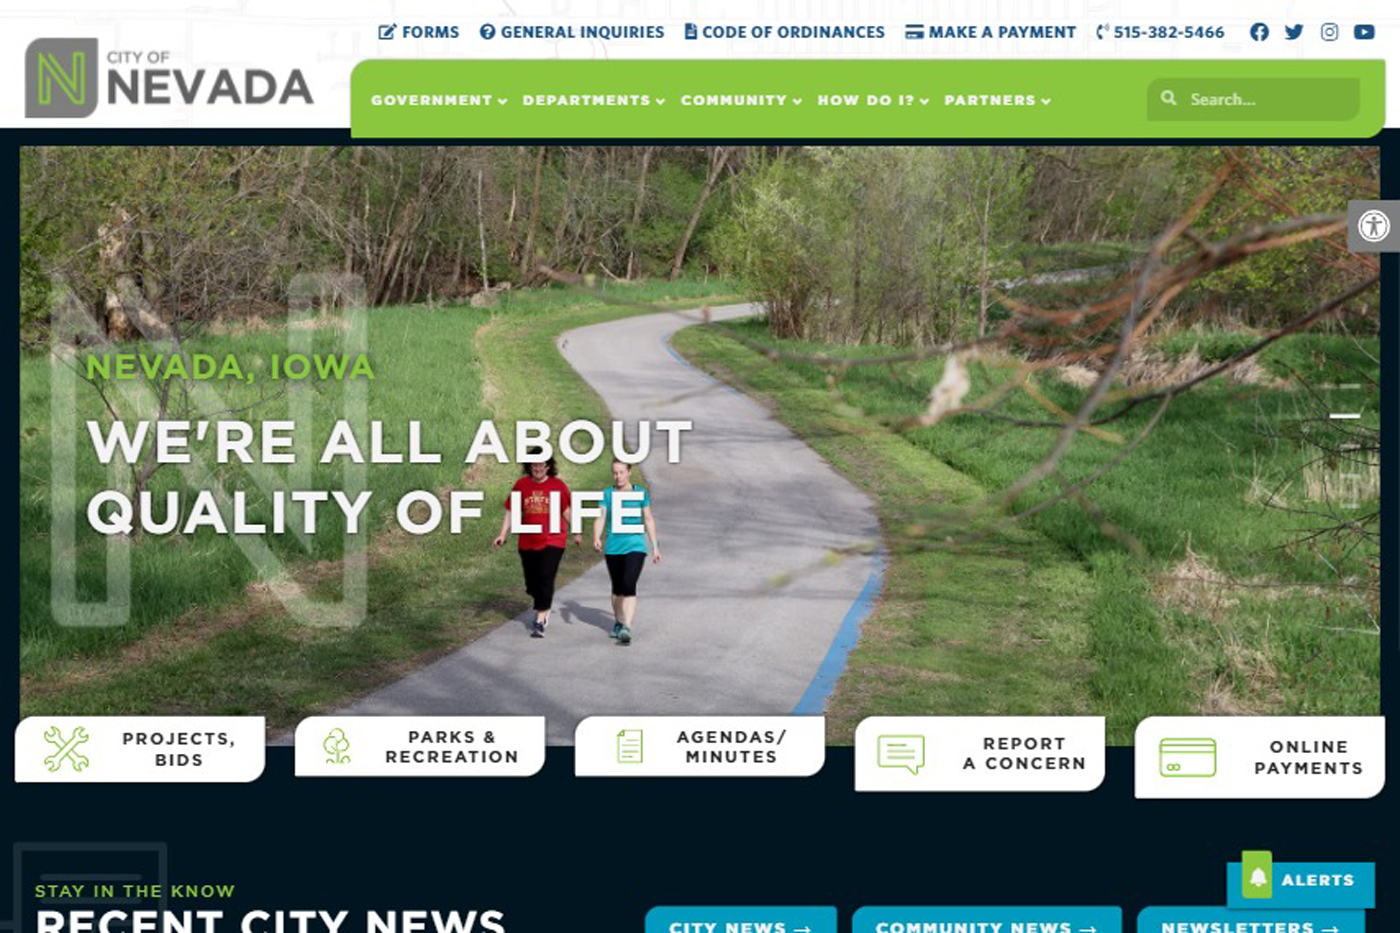 Screenshot of the City of Nevada website design